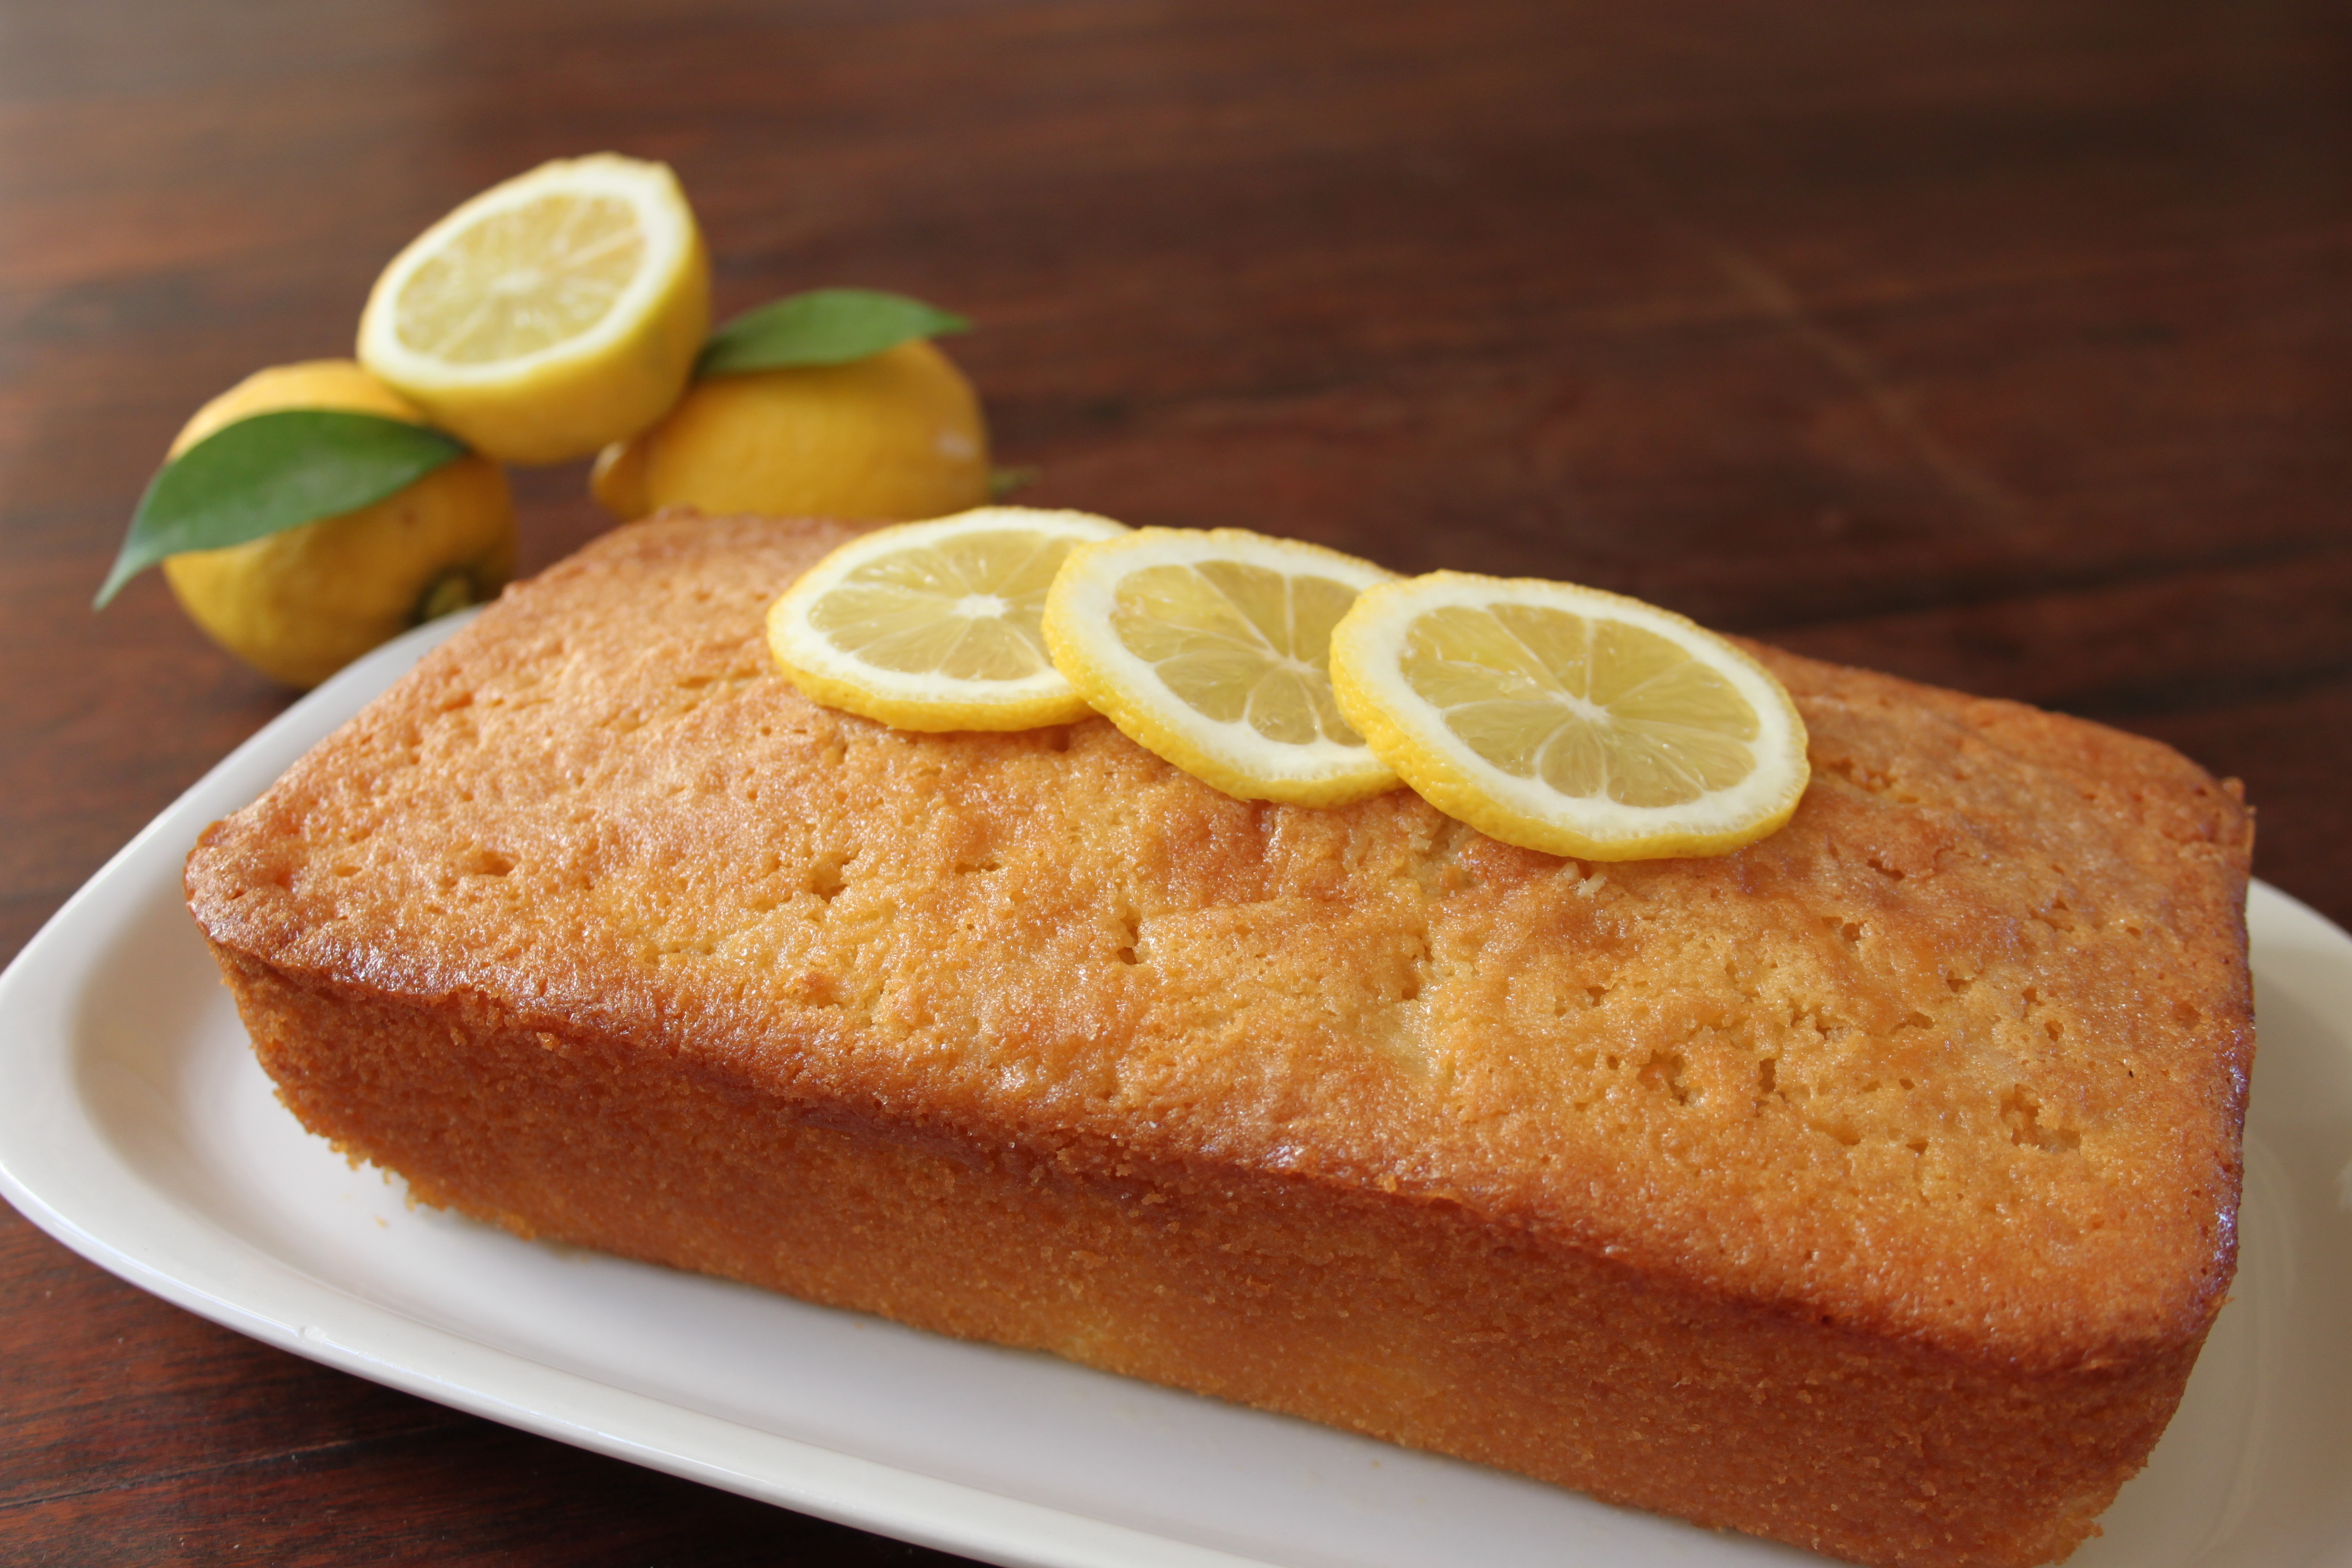 Lemon Cake Recipe